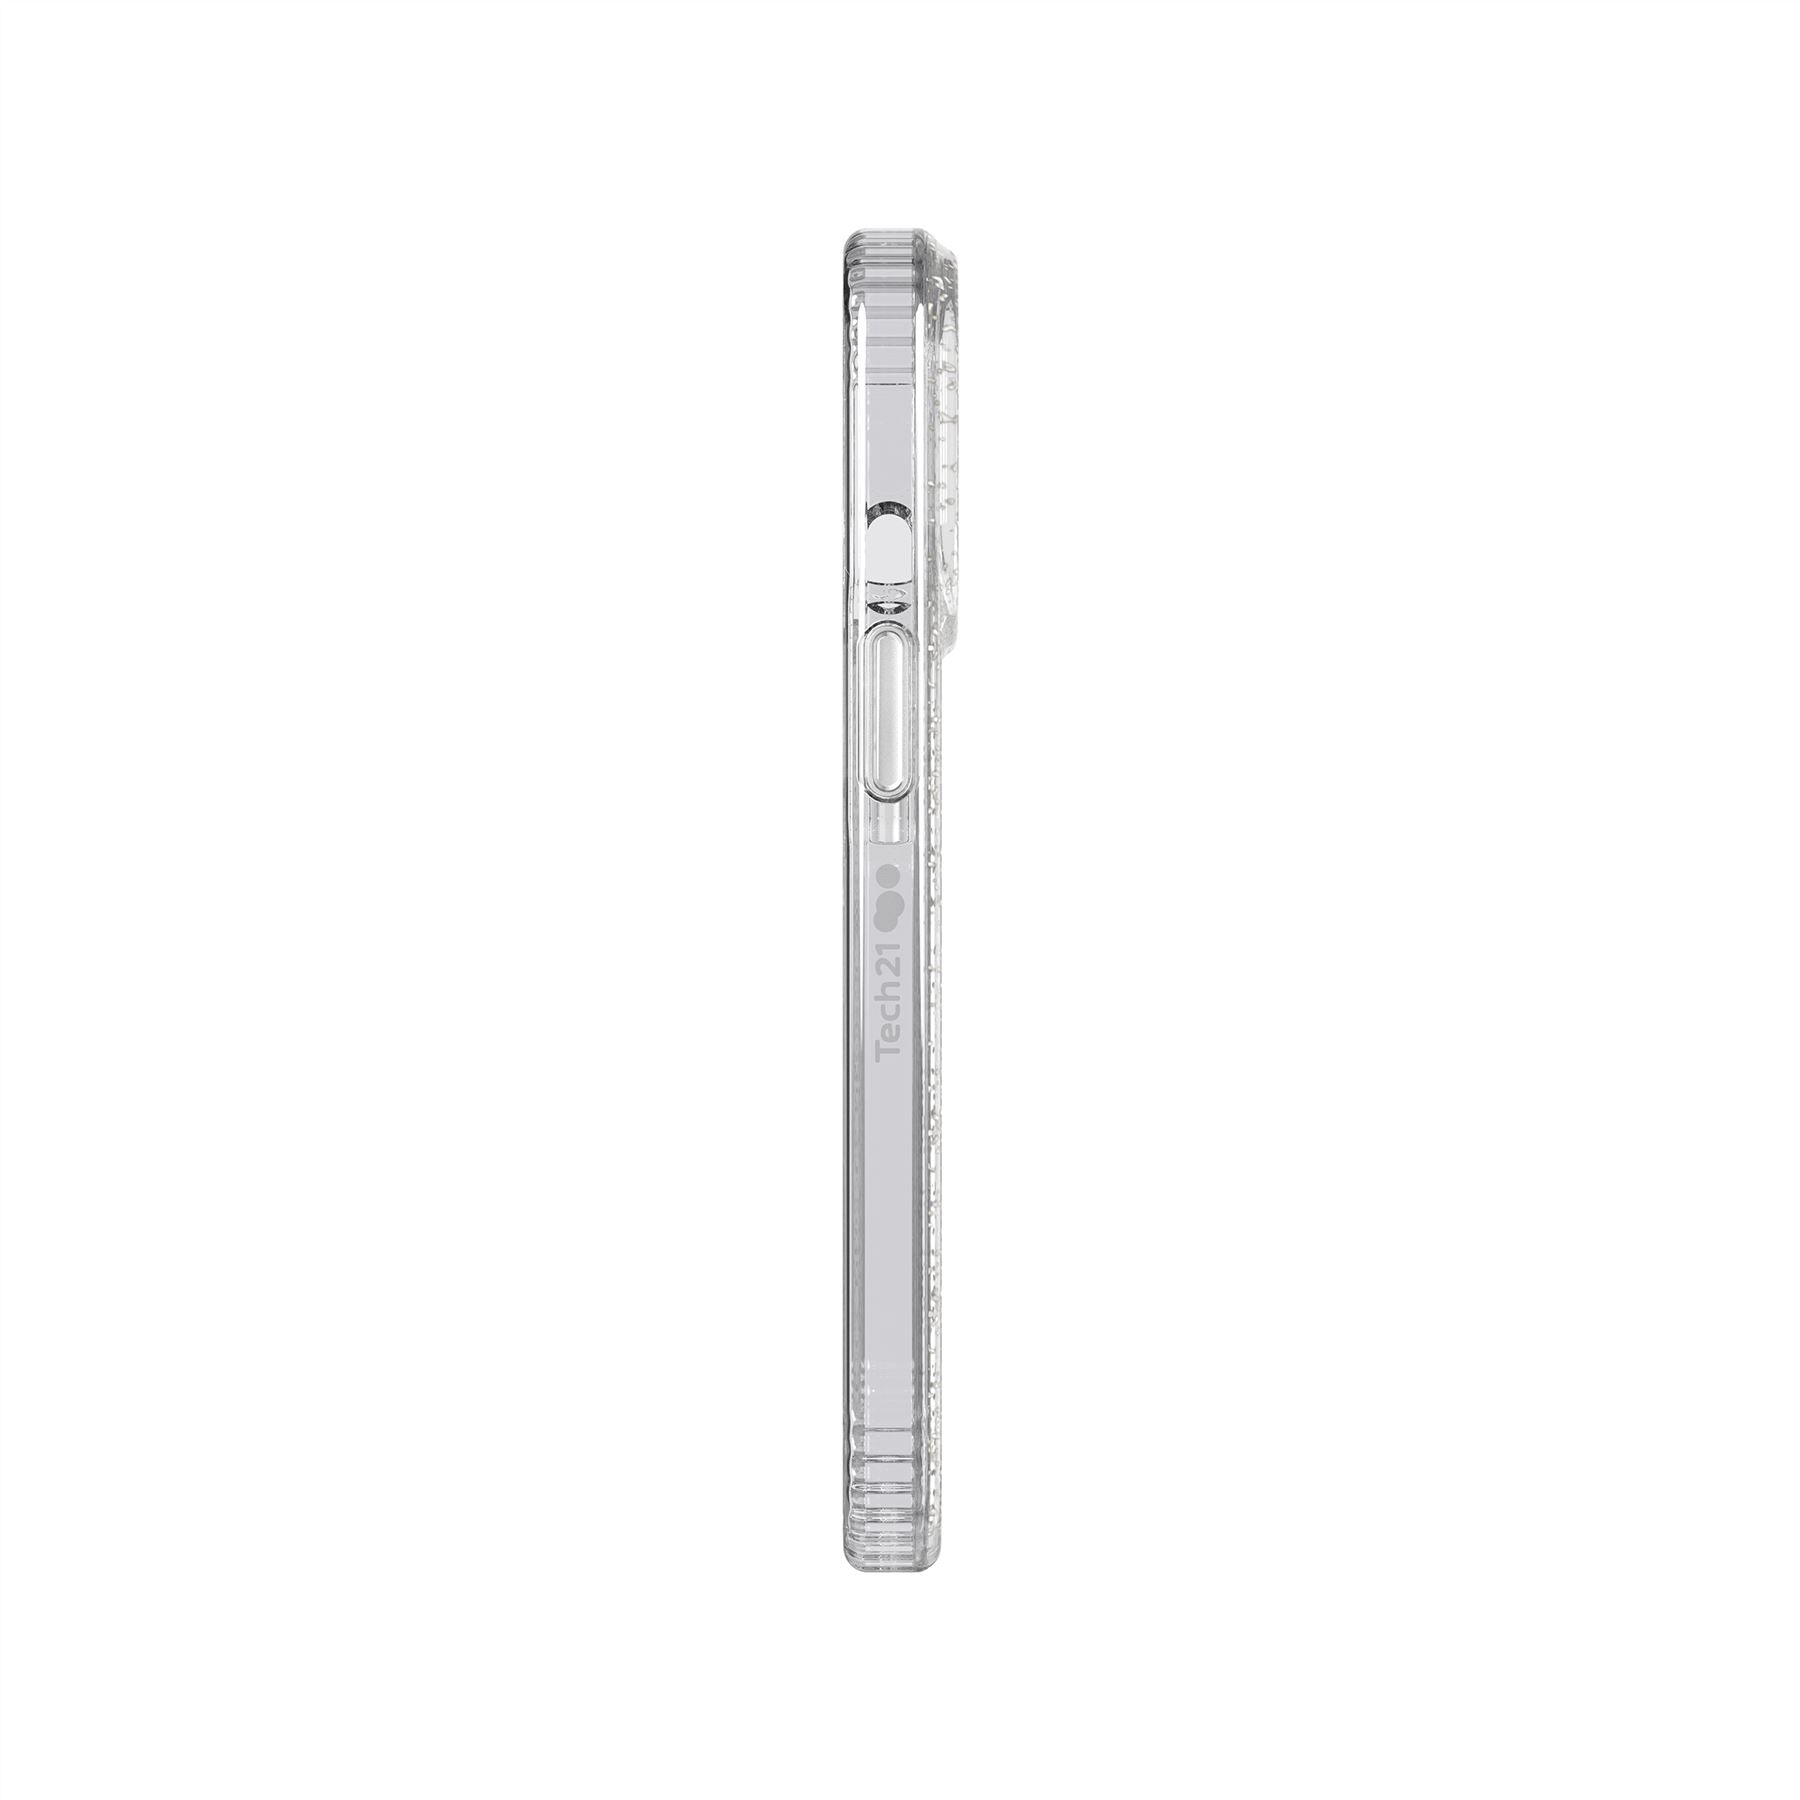 Evo Sparkle - Apple iPhone 13 Pro Case - Silver